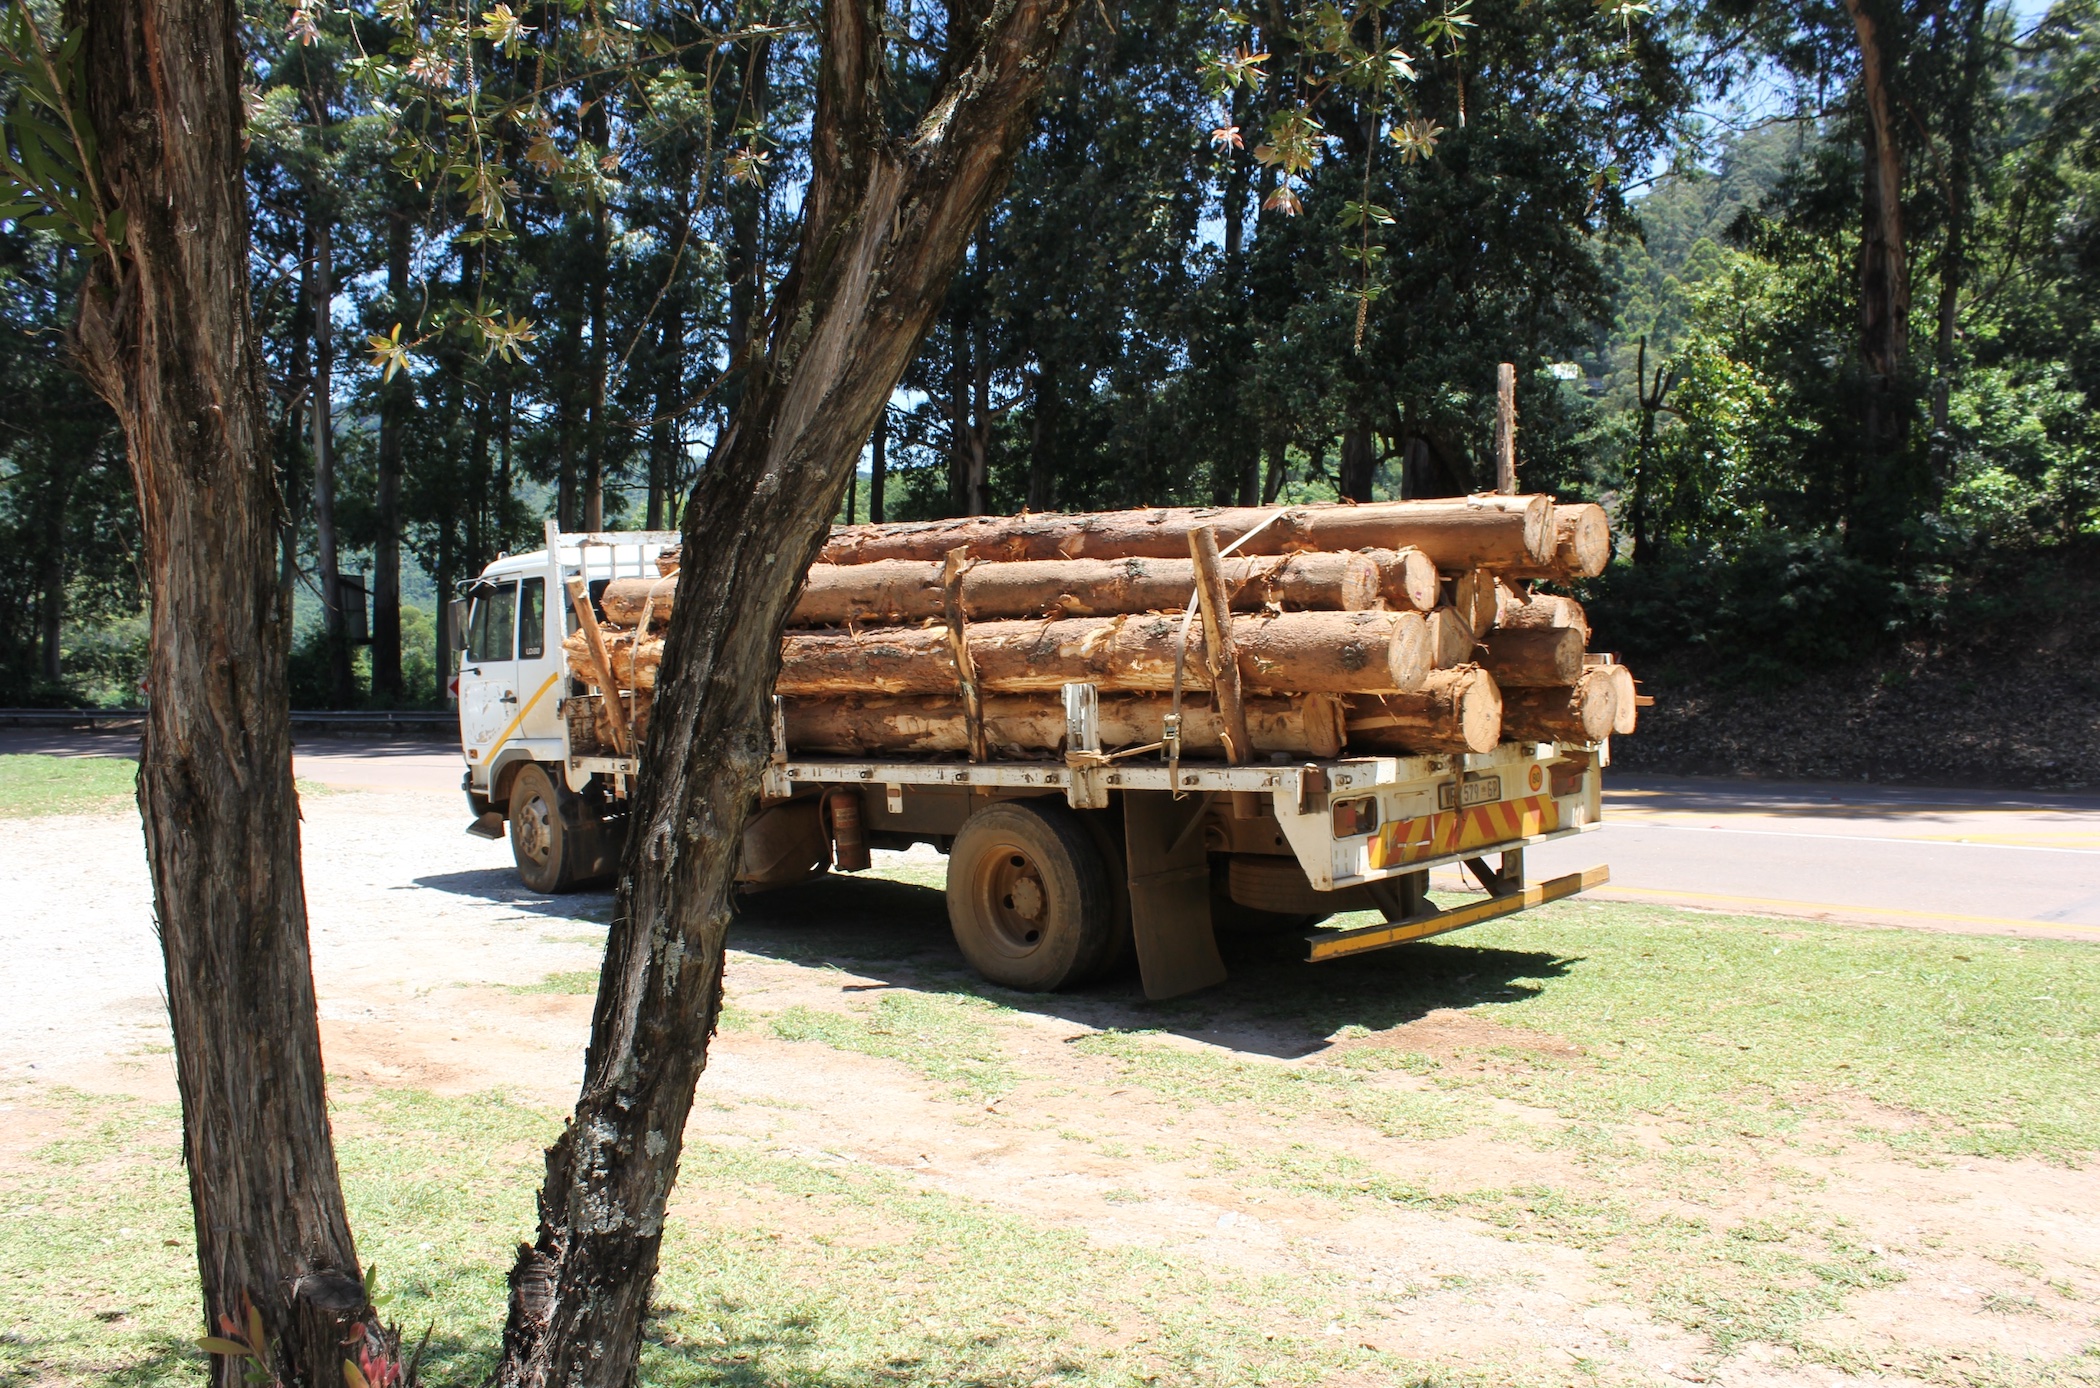 Log truck fully loaded; image by Dineo Motau, via Unsplash.com.